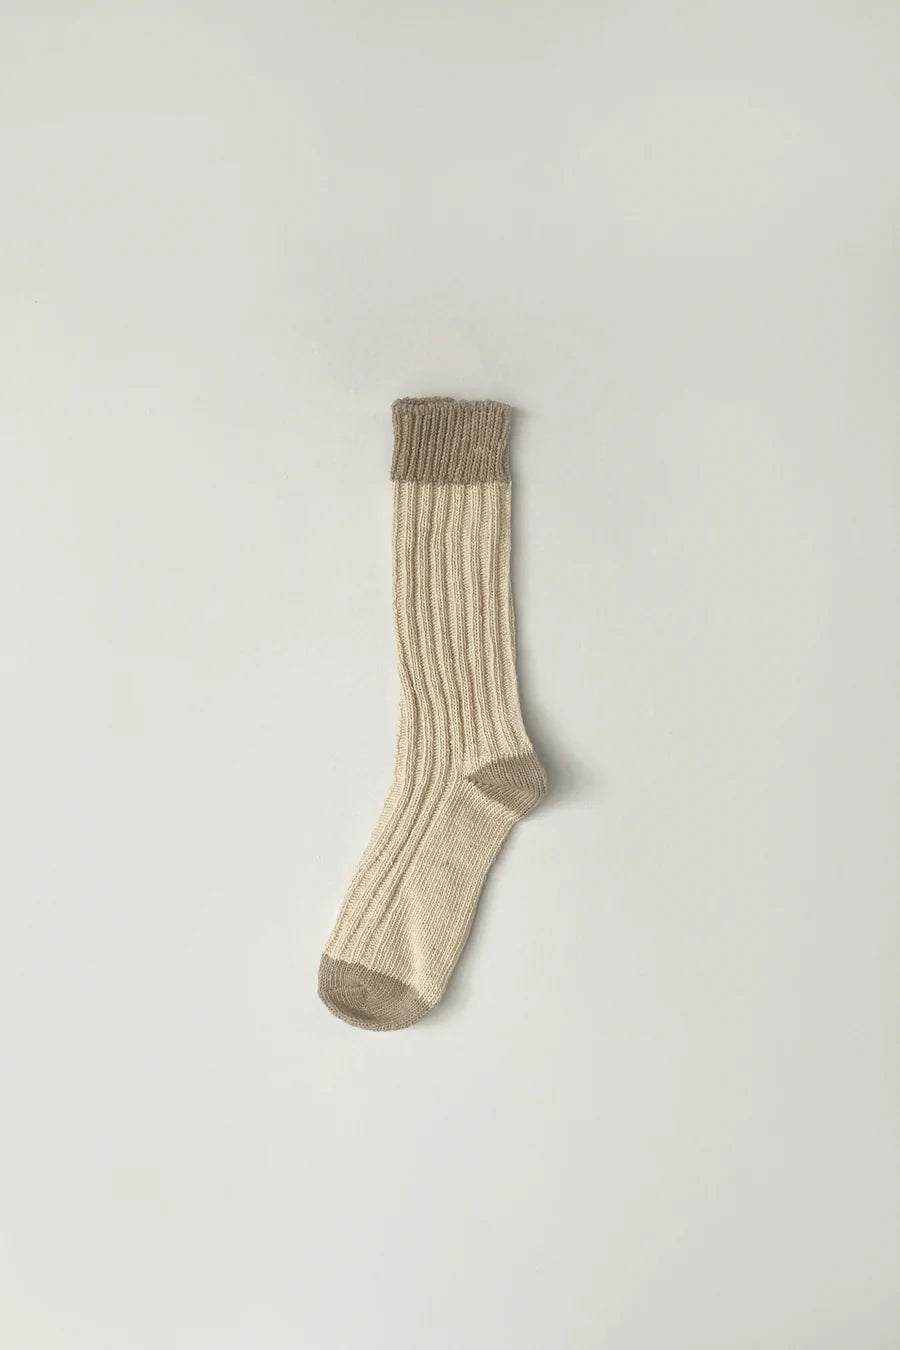 Deiji Studios - The Woven Sock